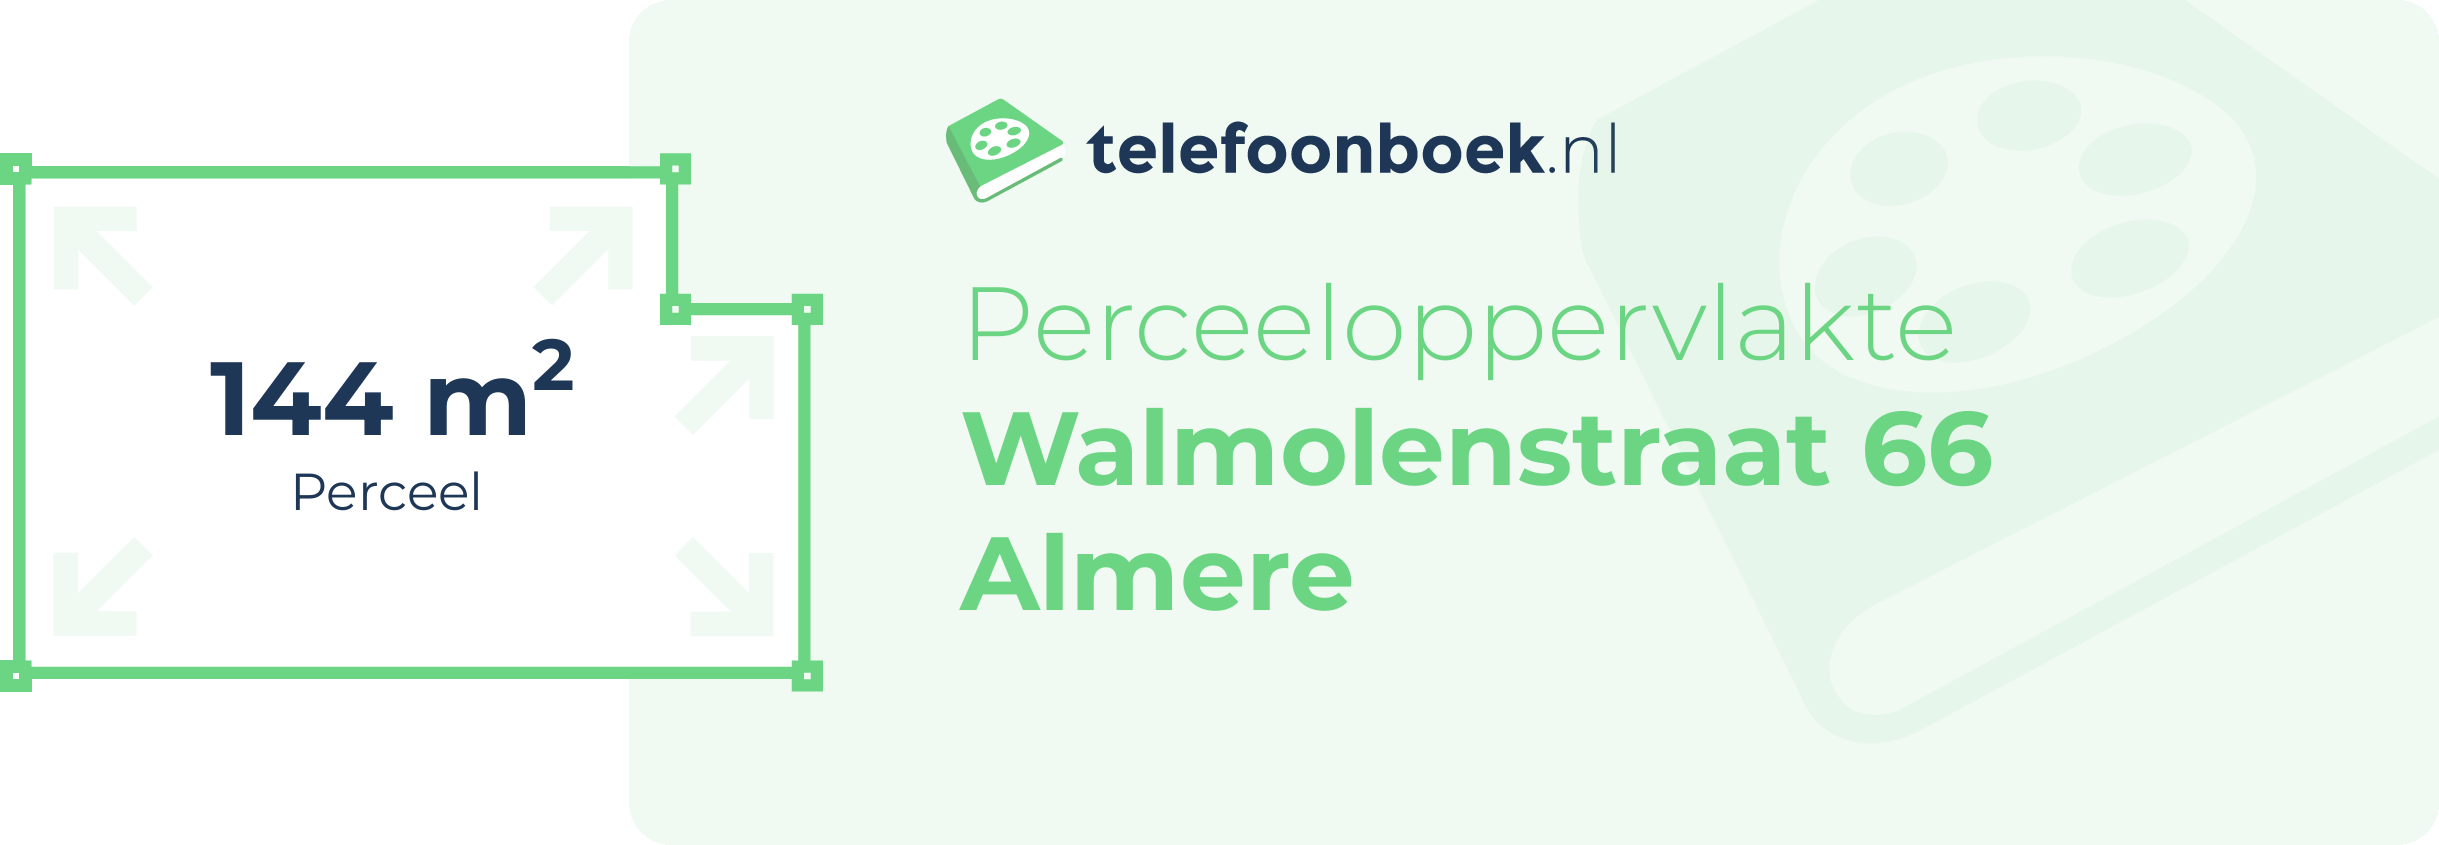 Perceeloppervlakte Walmolenstraat 66 Almere